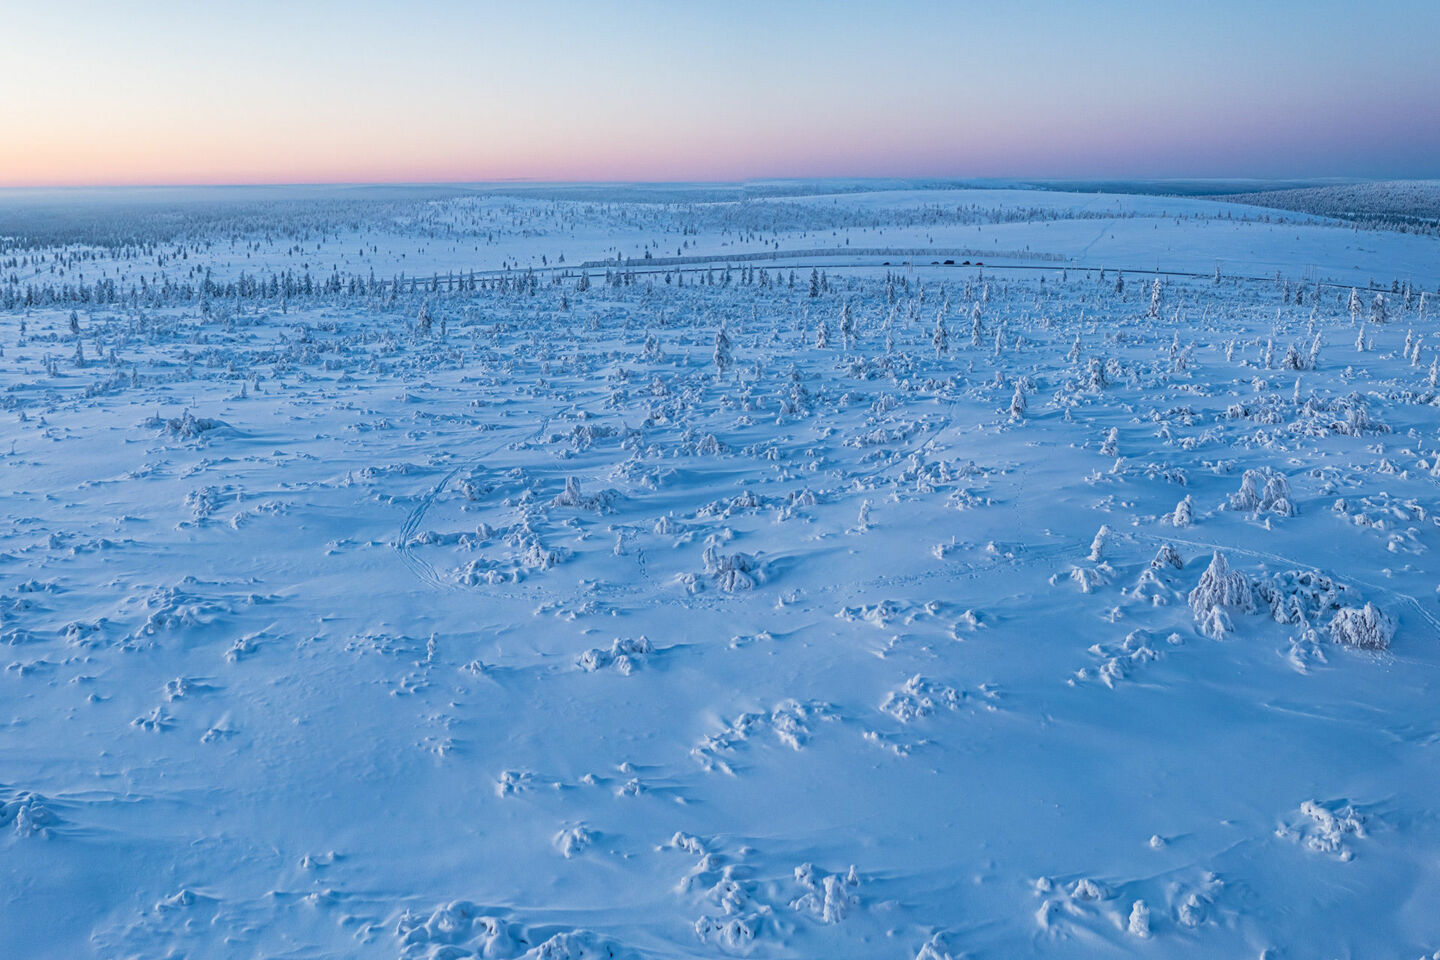 Polar night atop the fells in Inari, a Finnish Lapland filming location